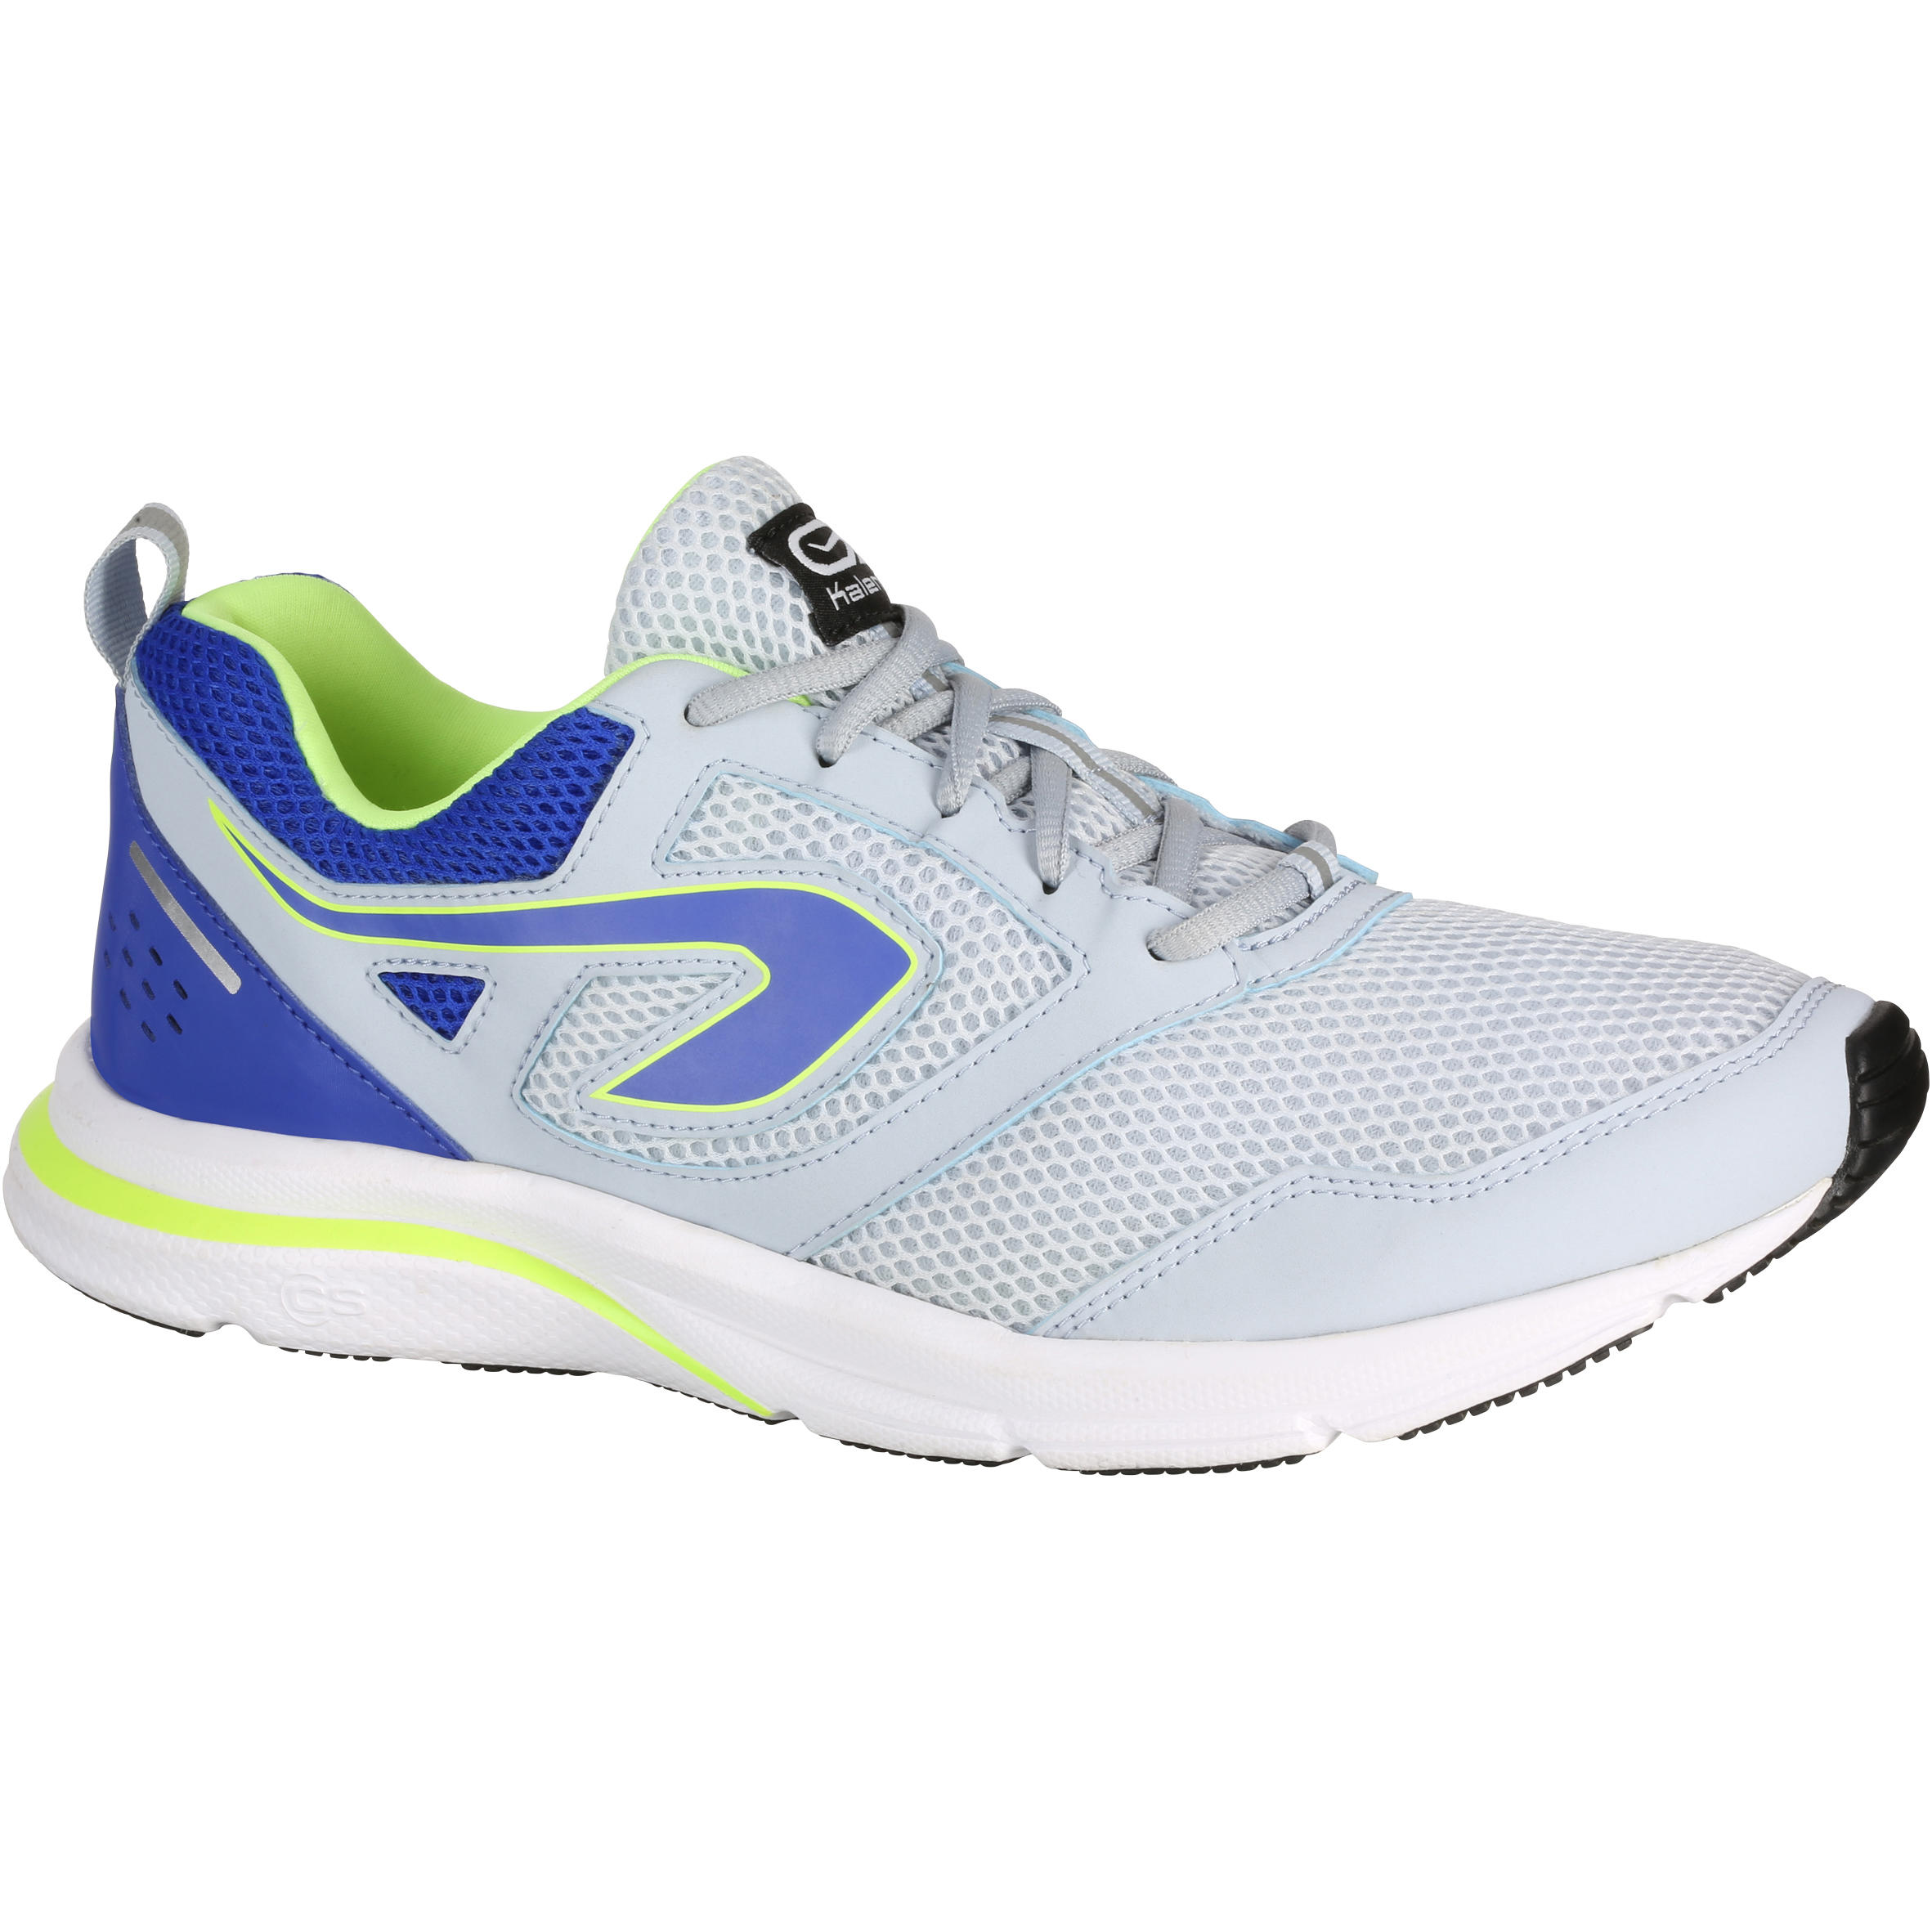 KALENJI Run Active Men's Running Shoes - Grey Blue